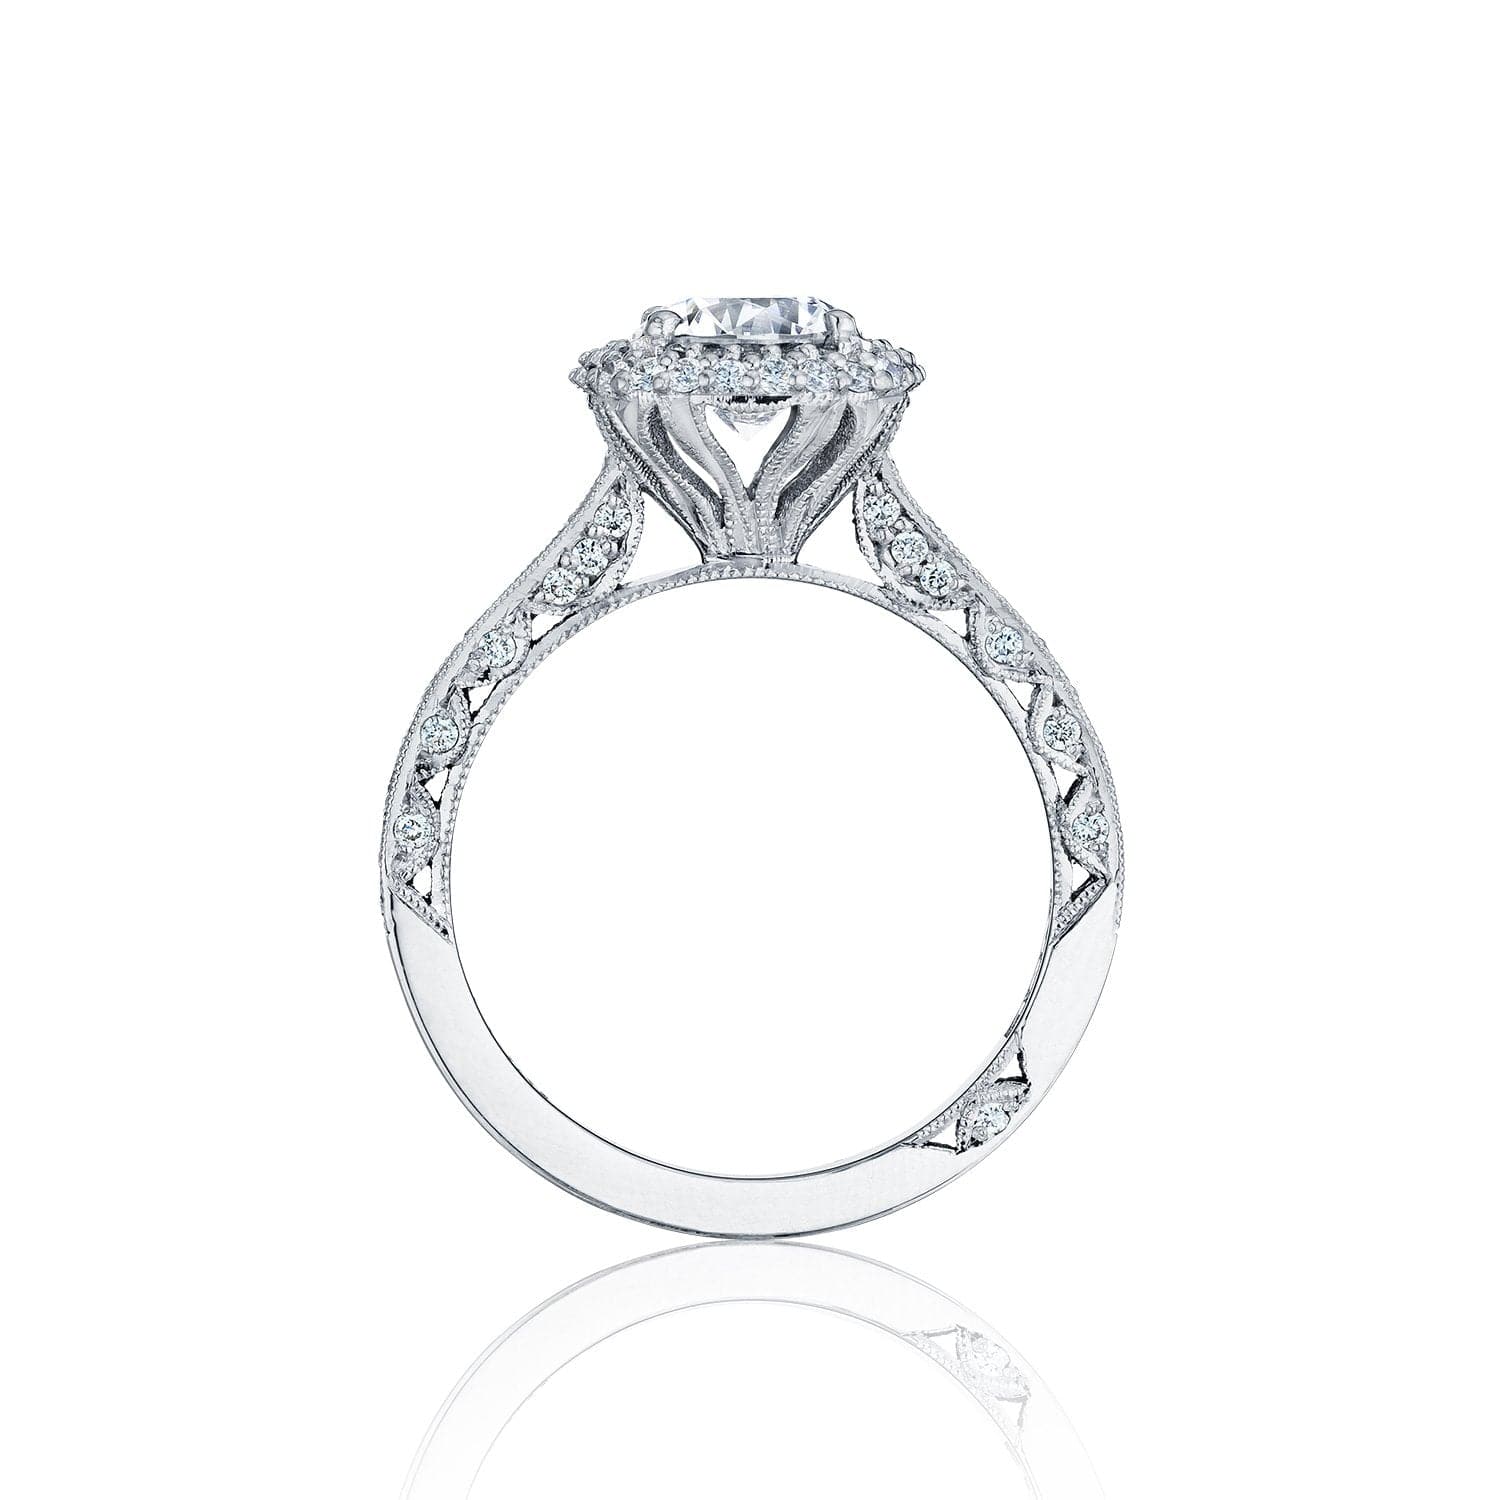 Tacori Engagement Engagement Ring Blooming Beauties Halo Engagement Setting 6.5mm / 6.5